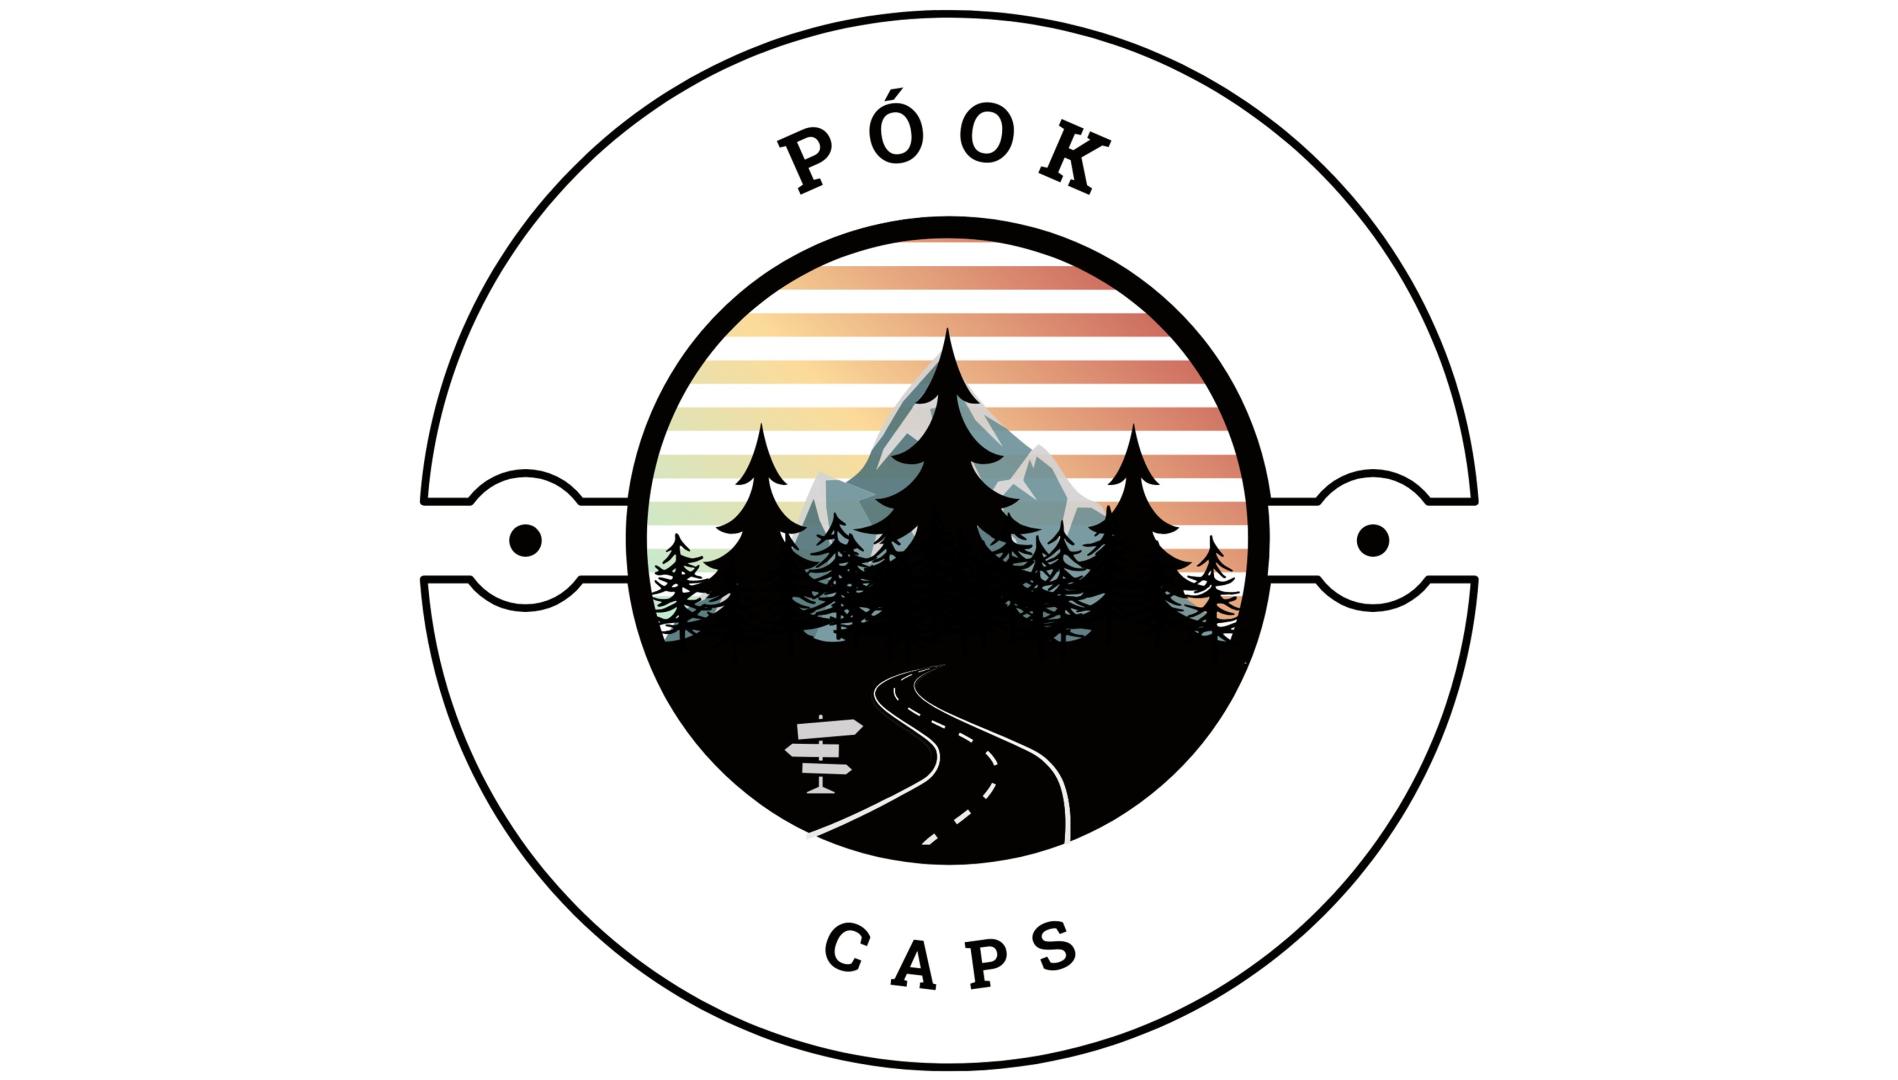 pook-caps-POOK CAPS.jpg